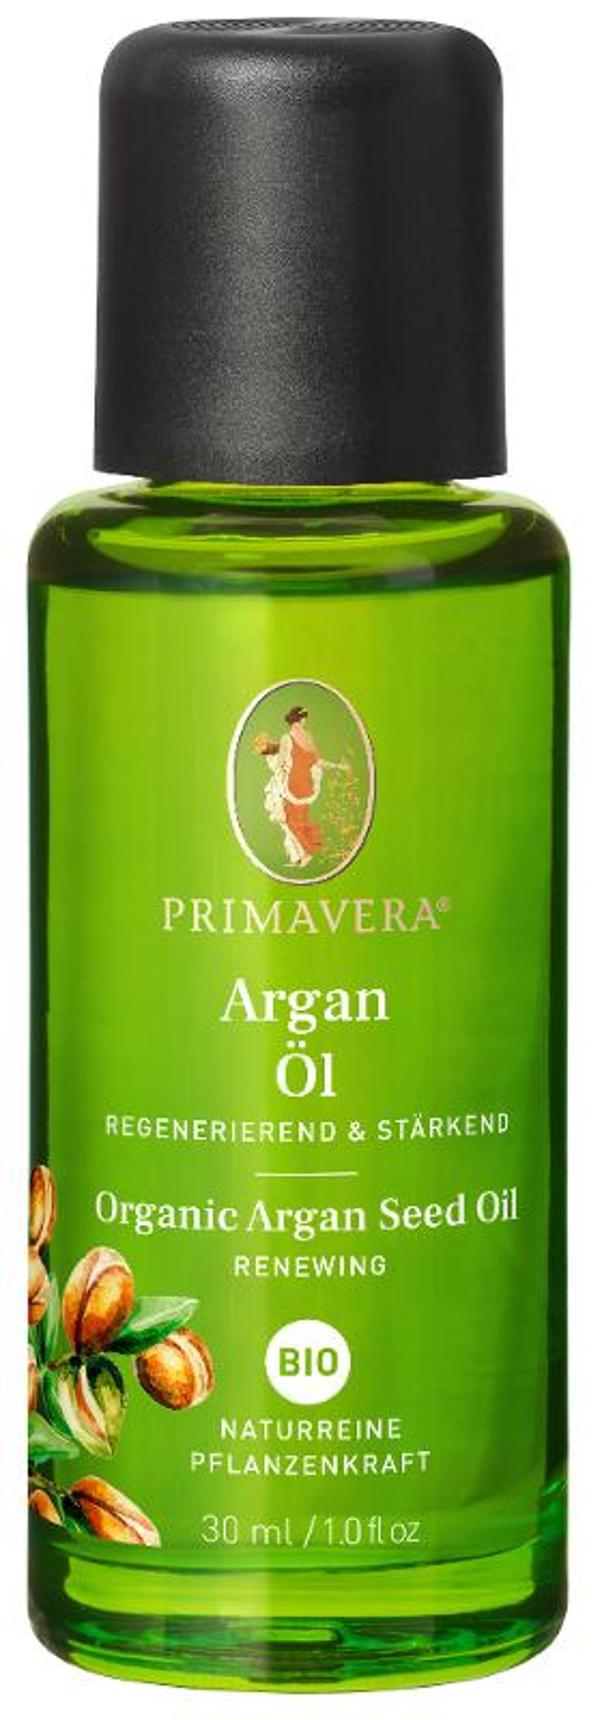 Produktfoto zu Argan Pflegeöl 30 ml